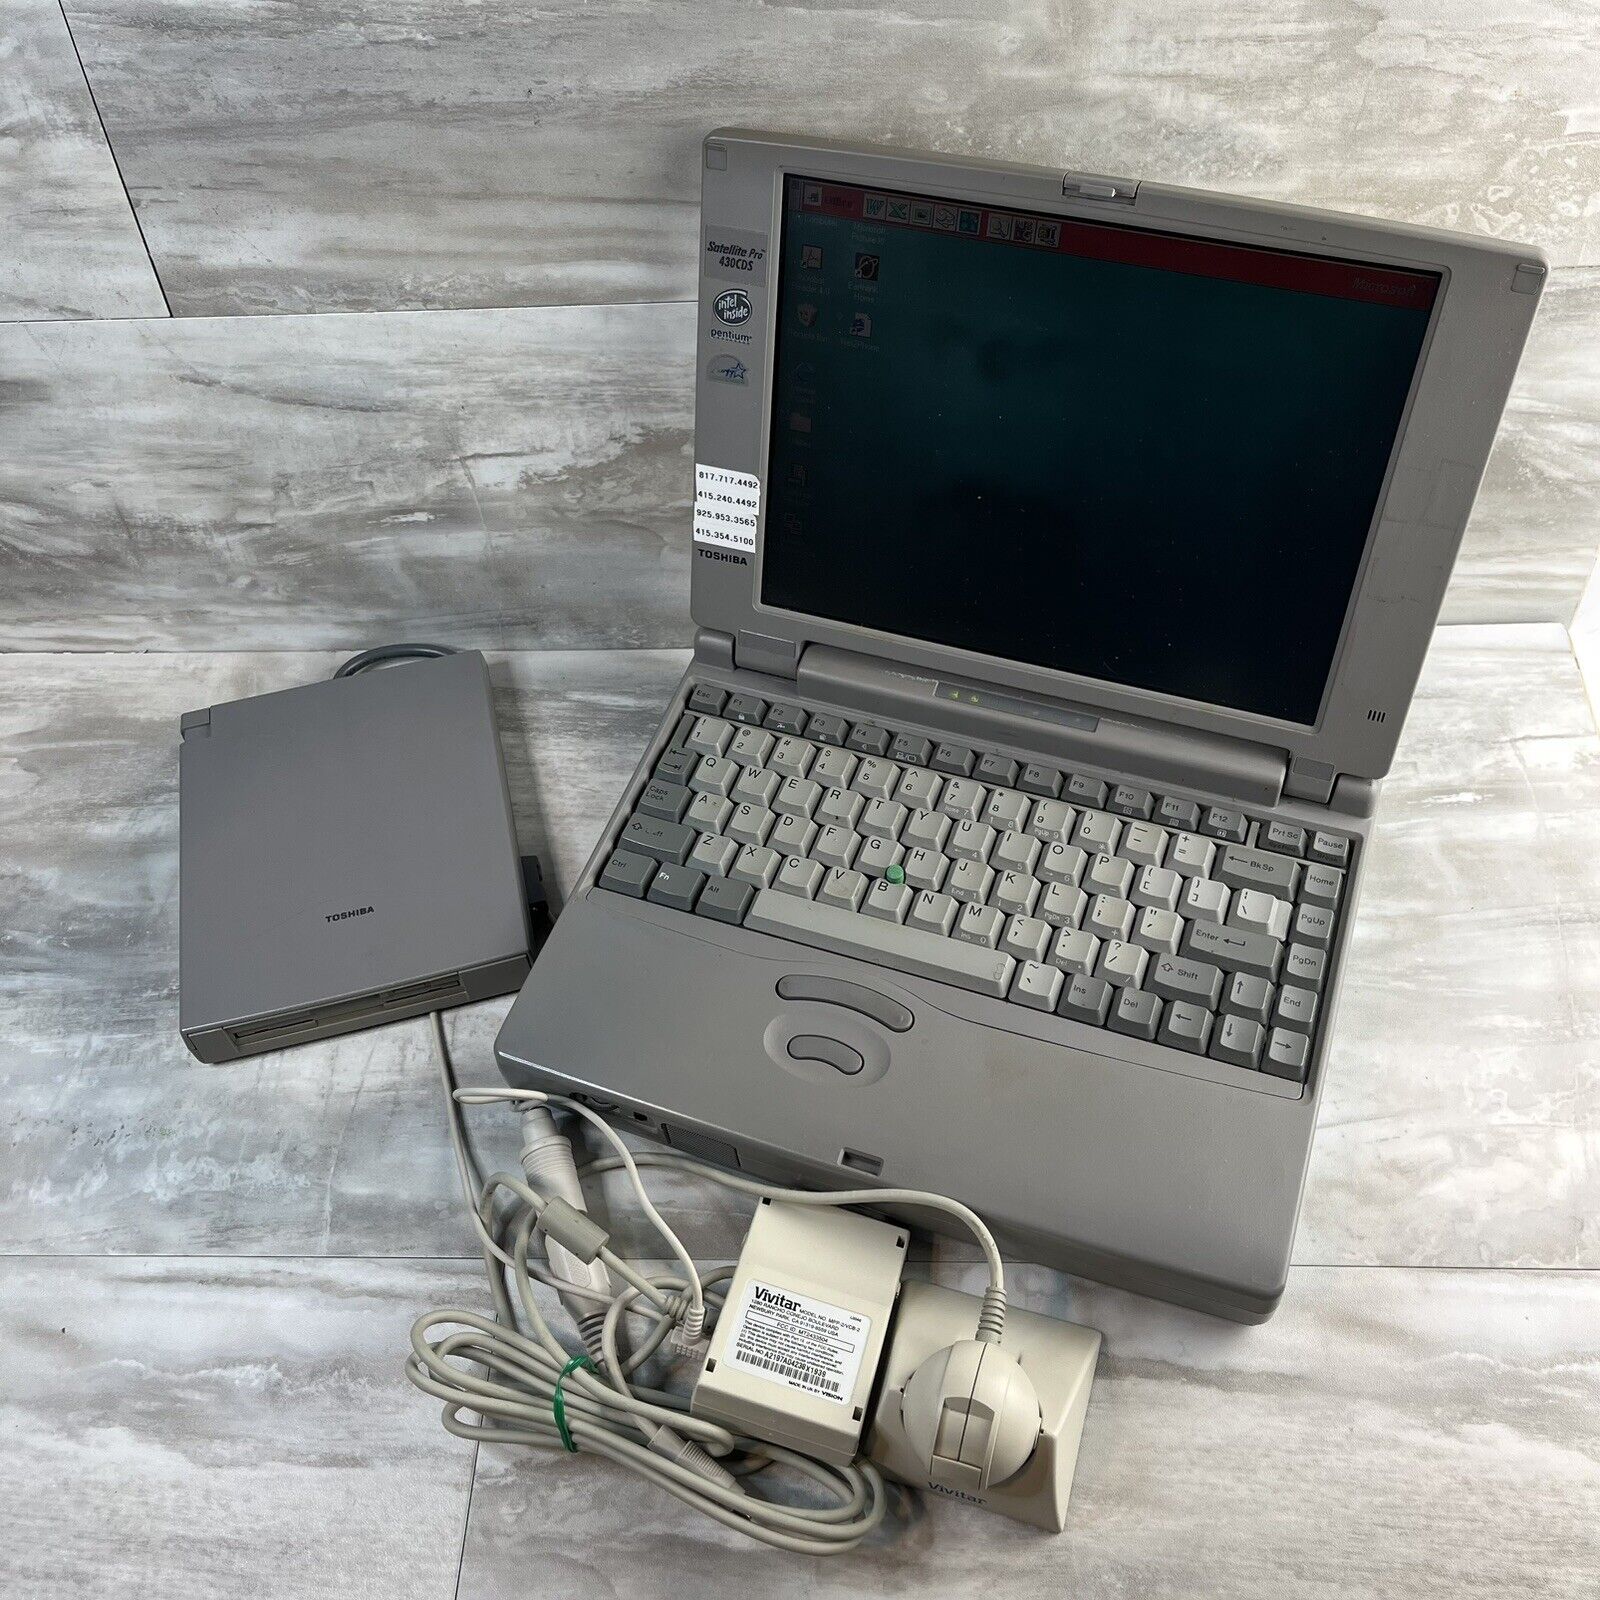 Working Toshiba Satellite Pro 430 CDS Model No PA1230U Vintage Windows 98 Laptop